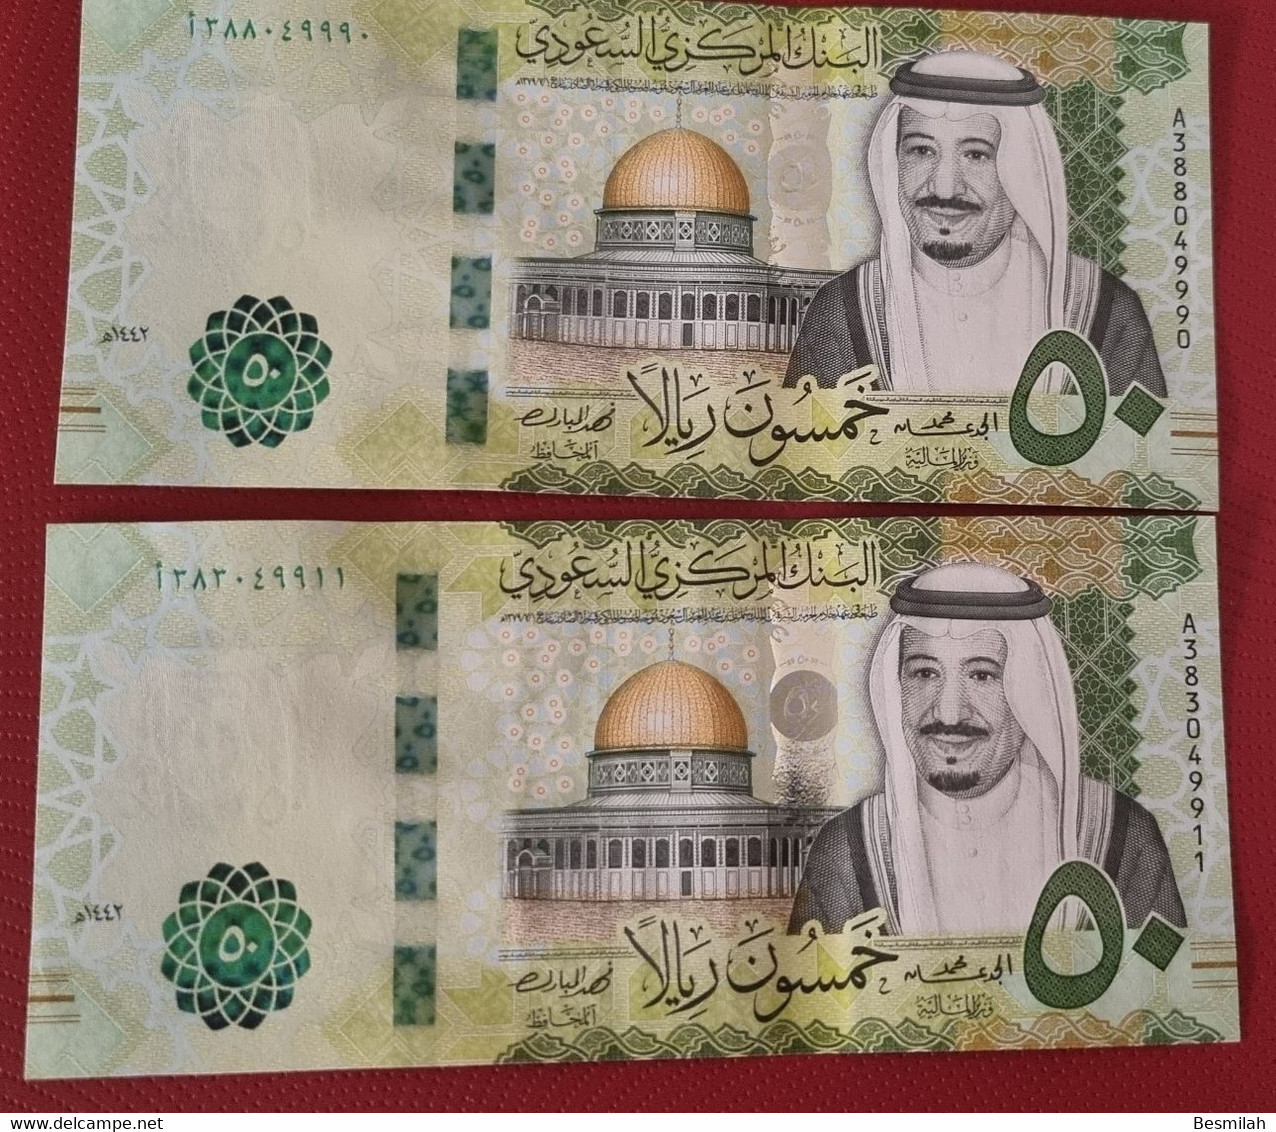 Saudi Arabia 50 Riyals 2021 (1442 Hijry) P-40 C UNC Two Notes From A Bundle New Name Saudi Central Bank - Saudi Arabia